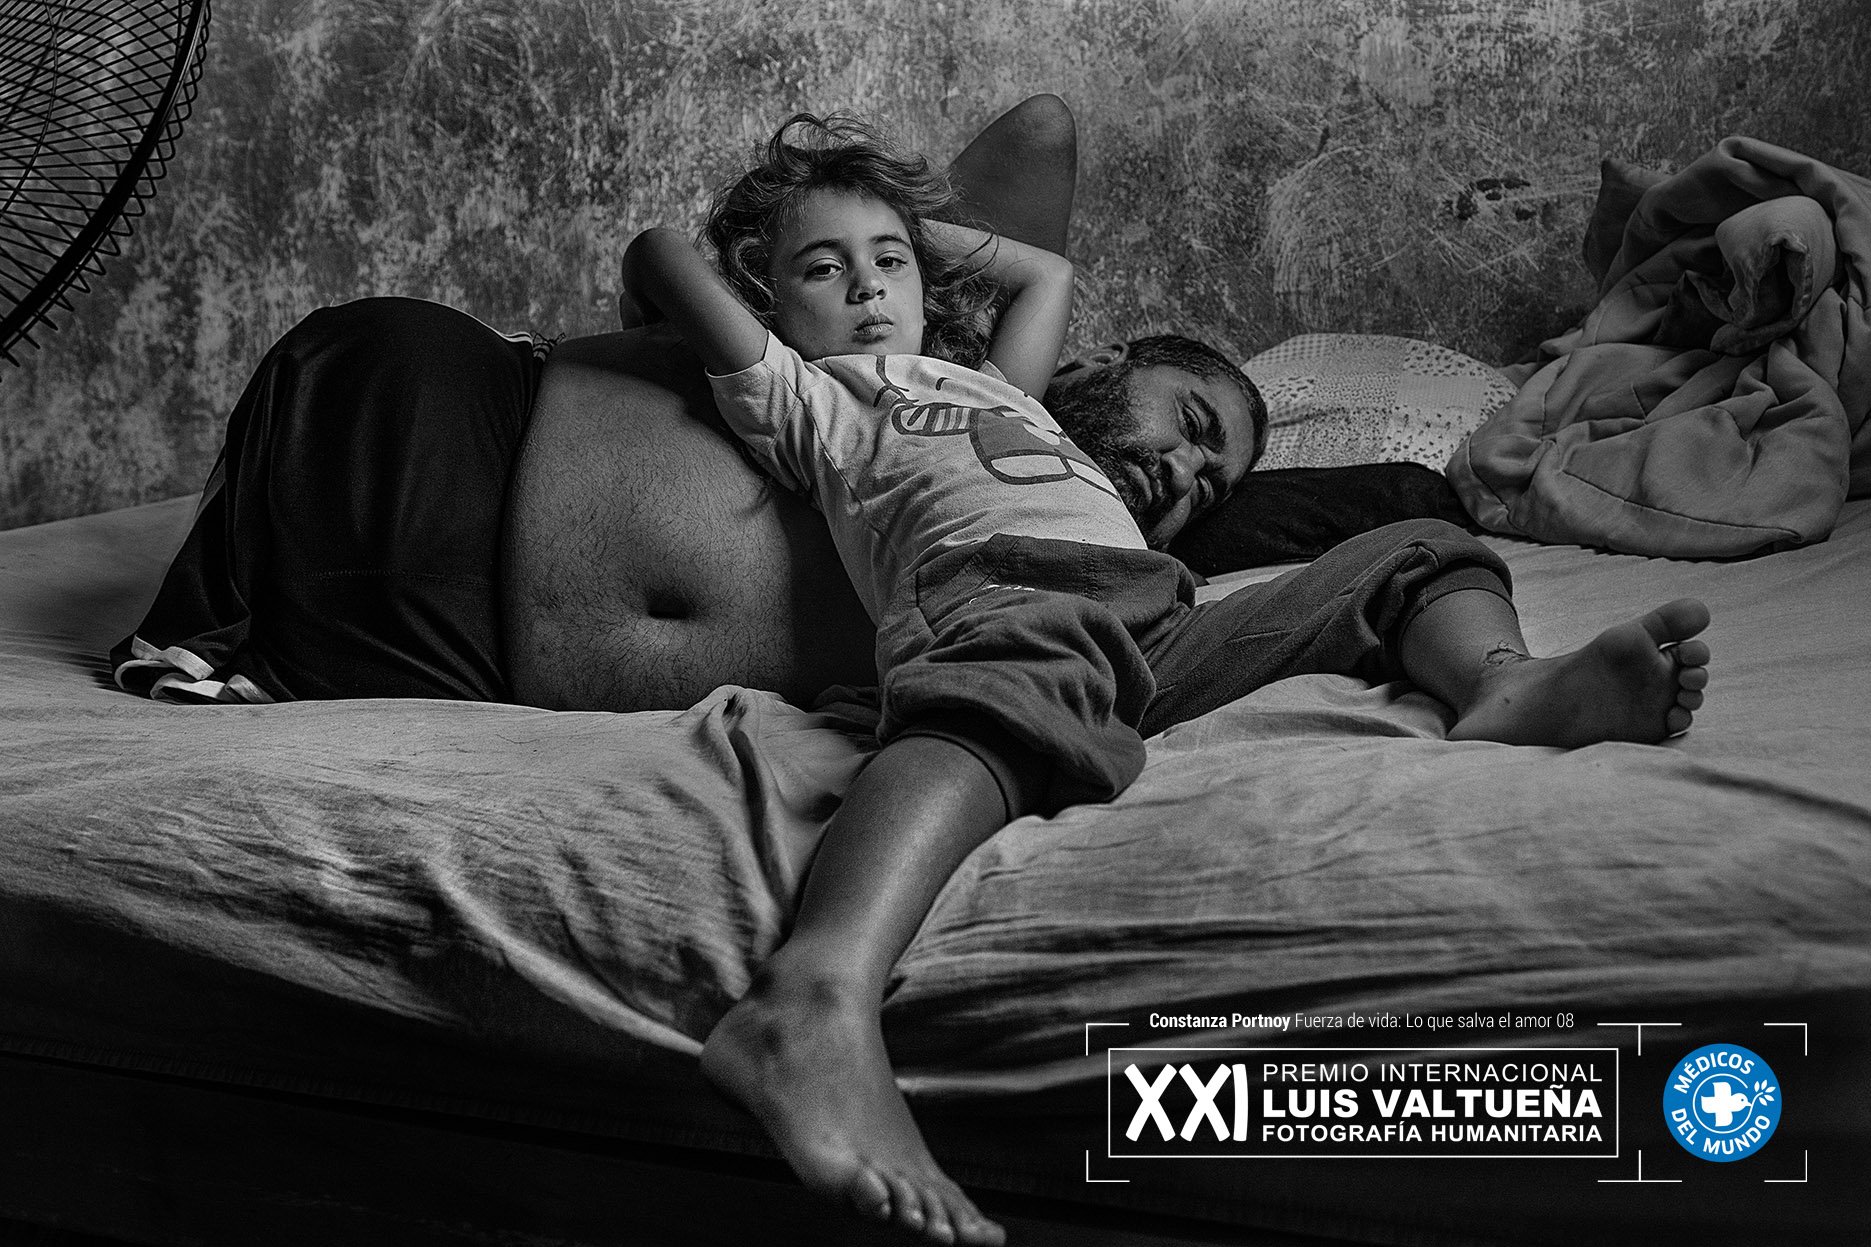 Luis Valtueña International Humanitarian Photography Award